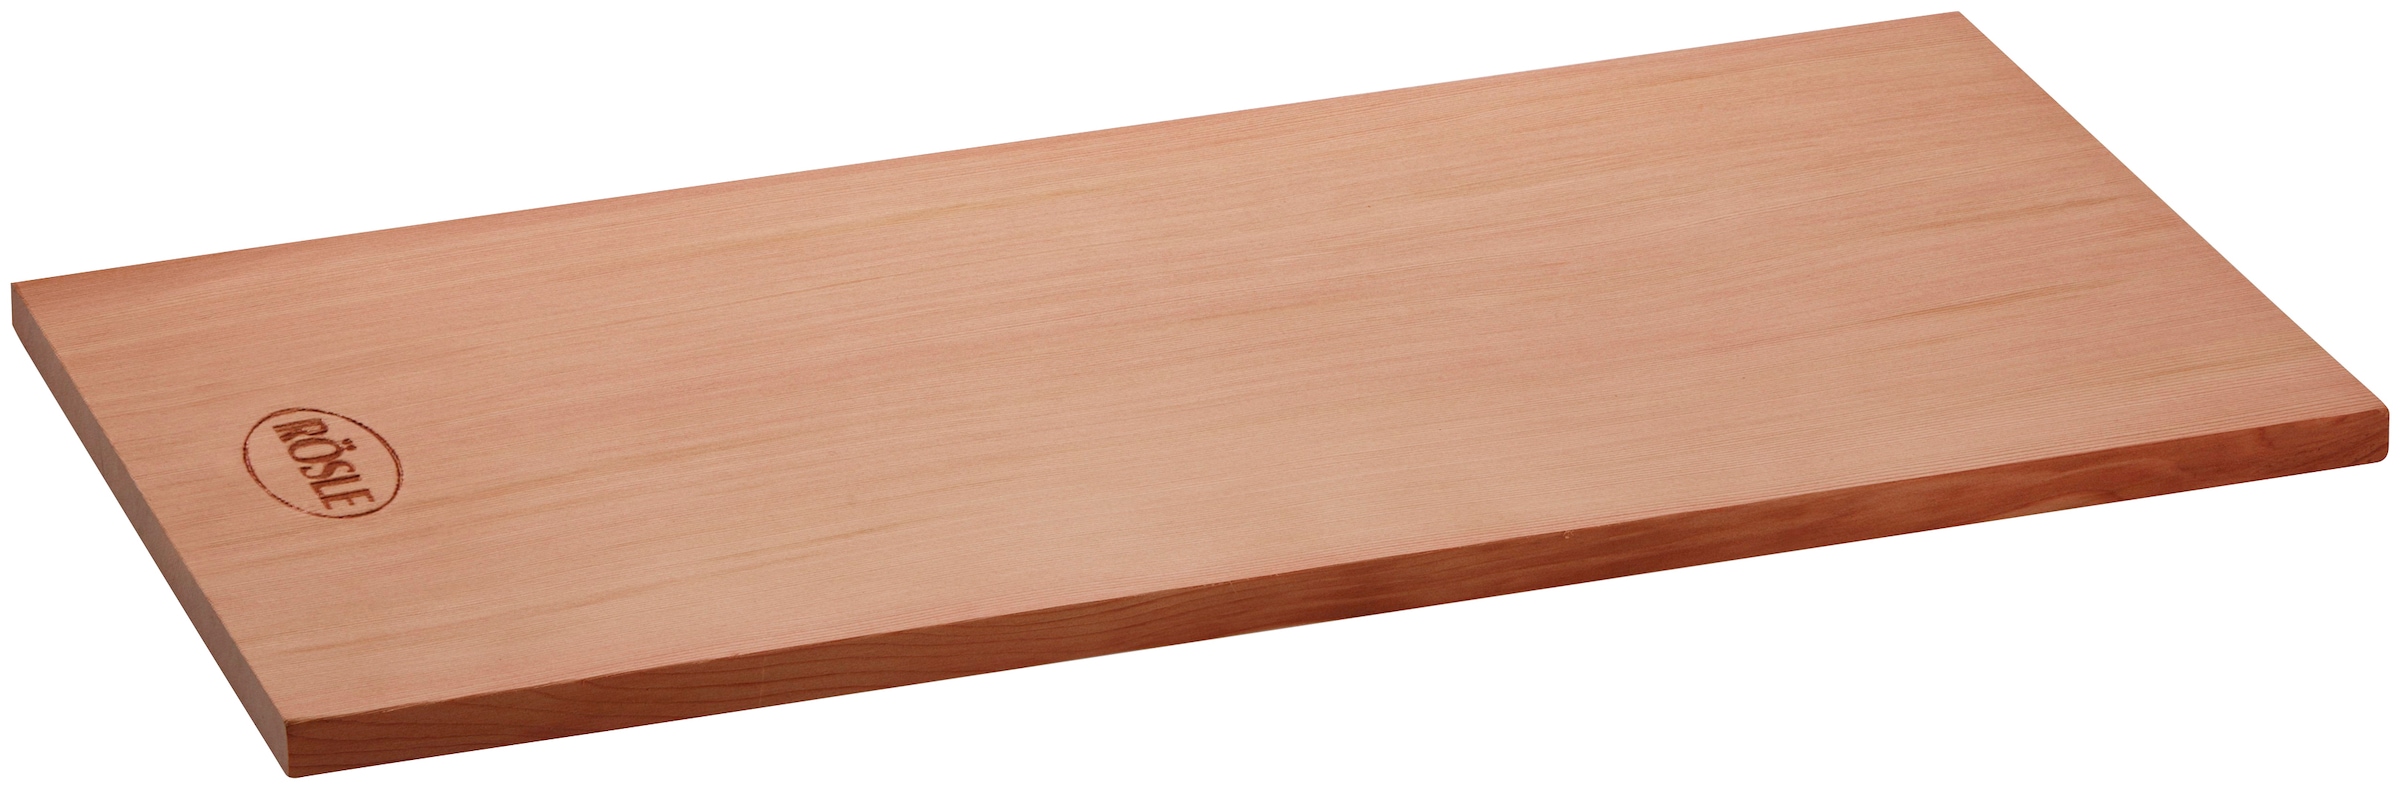 RÖSLE Aromaplanke »Holzplanke Zedernholz, 25077«, Holz, (2 St.), für Holzaroma im Grillgut, mehrfach verwendbar, 40x19,5 cm